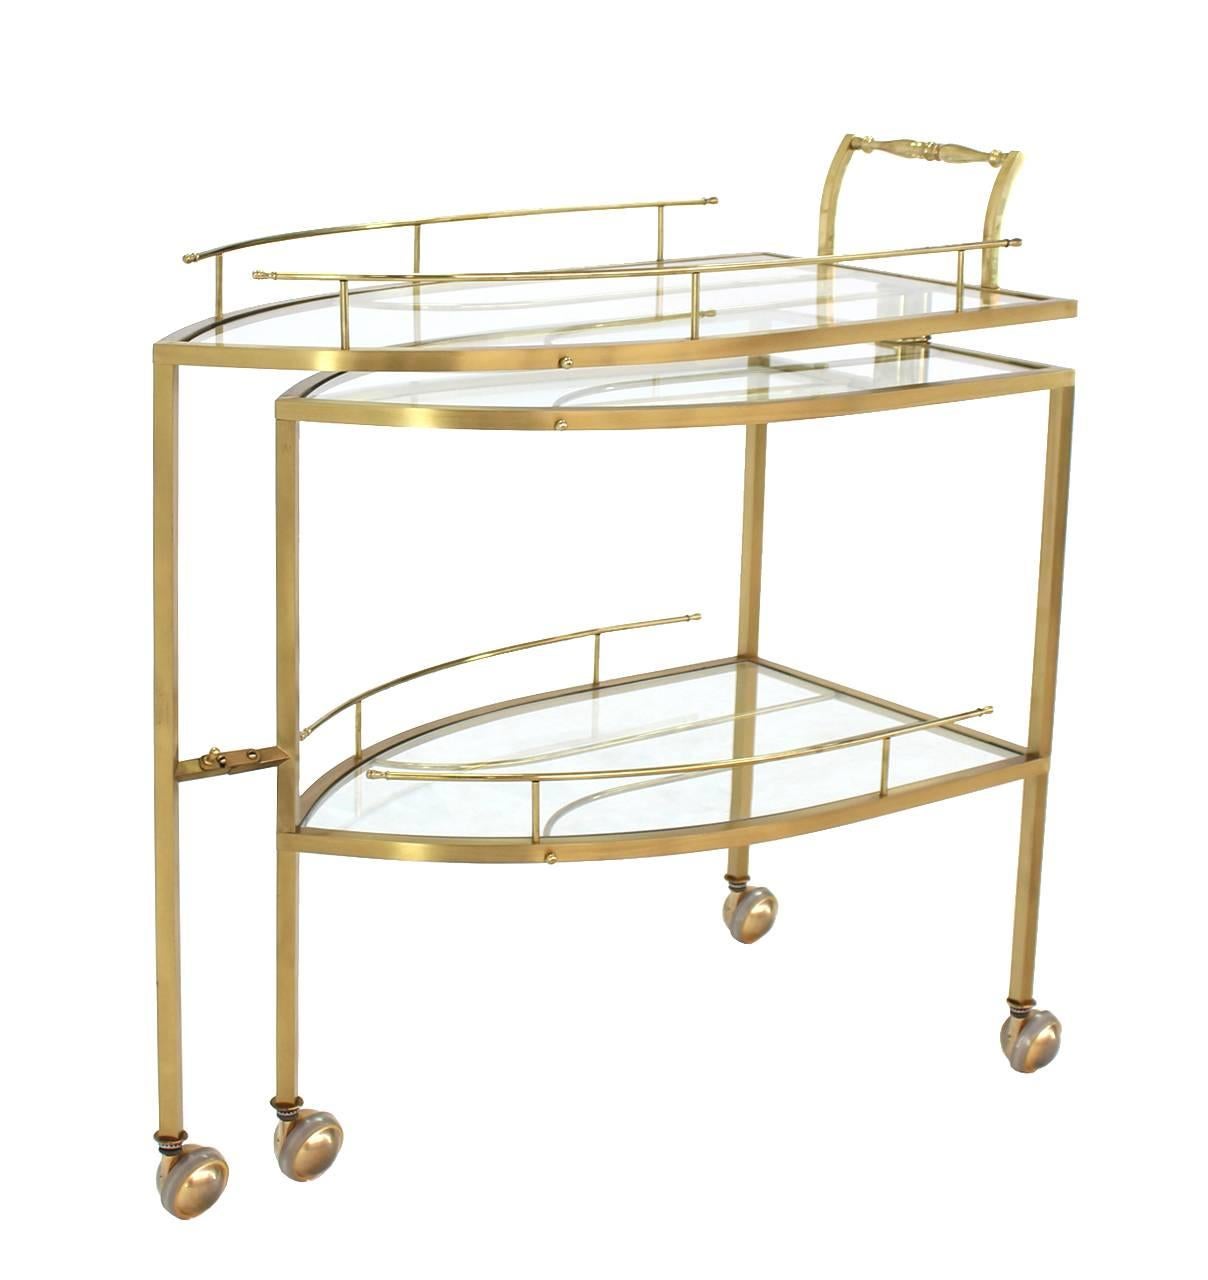 Very nice unusual iron shape brass teacart server or side table.